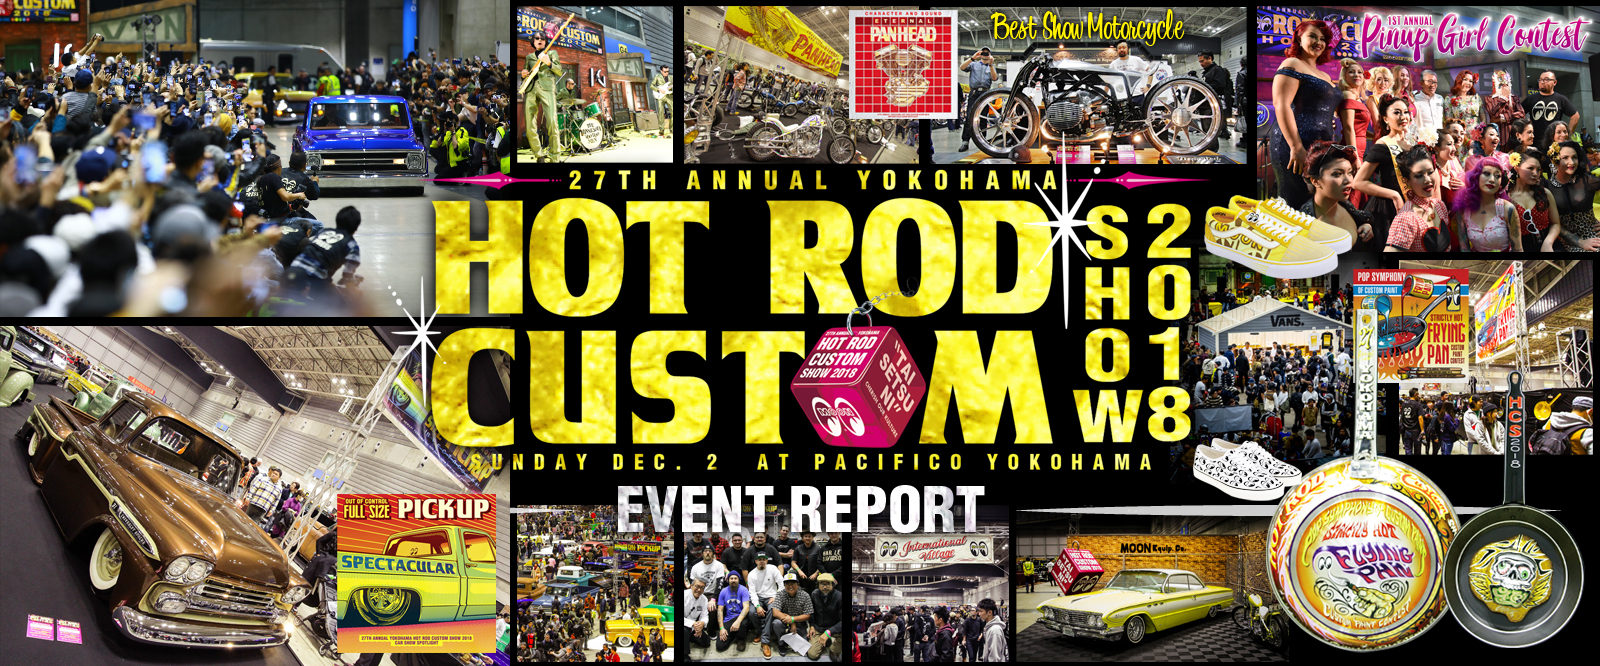 YOKOHAMA HOT ROD CUSTOM SHOW 2018 Event Report